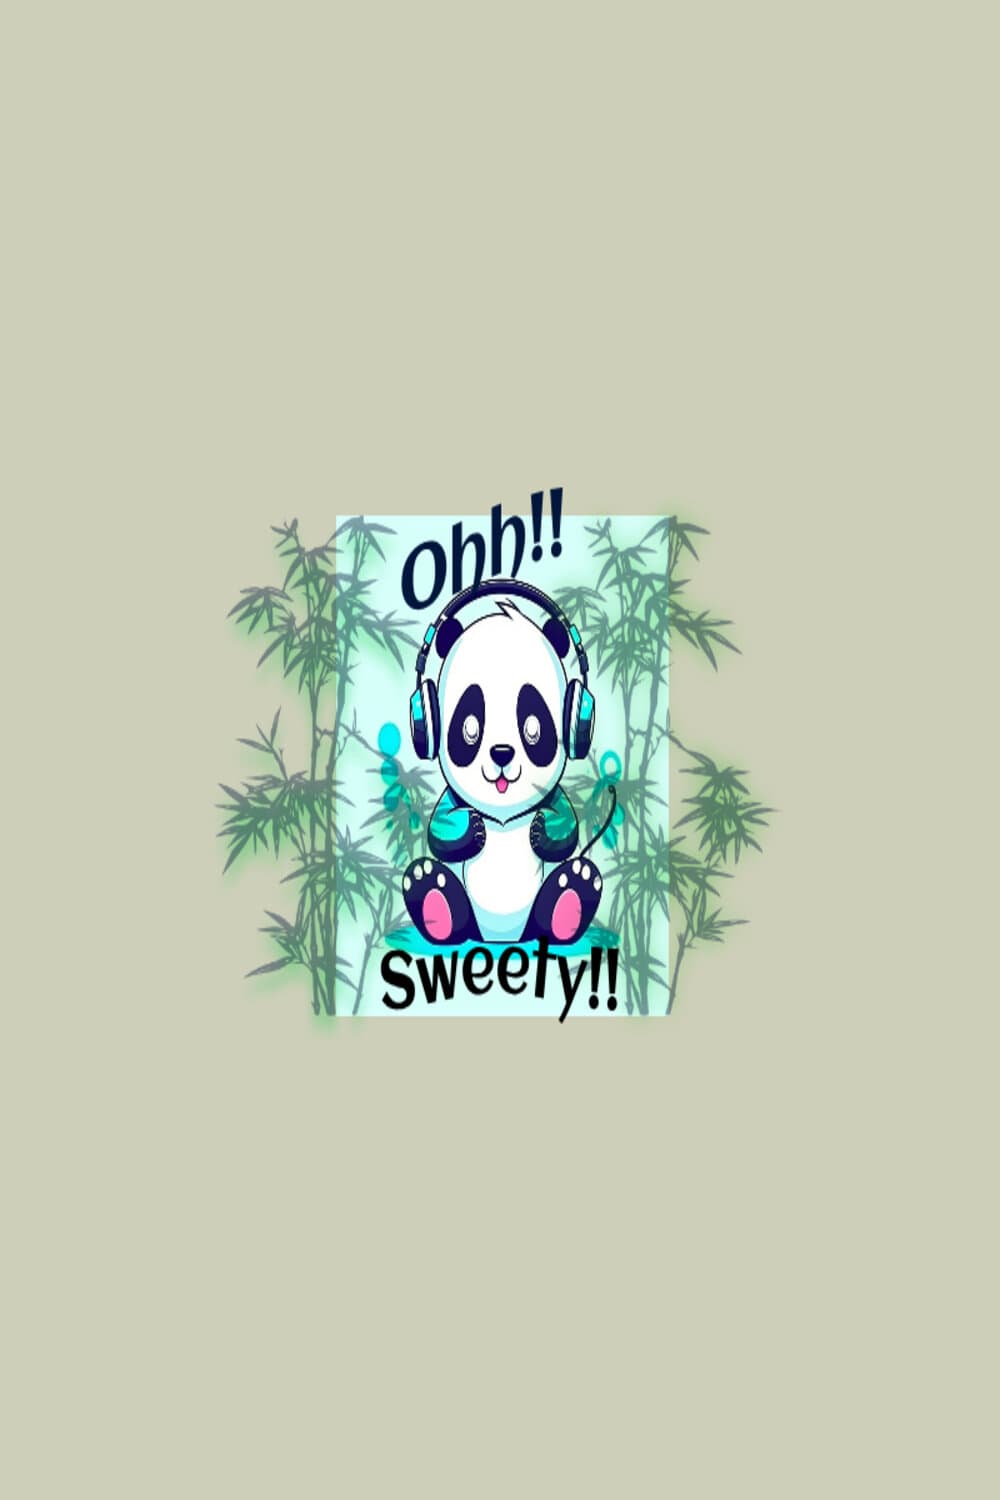 Cute panda pinterest preview image.